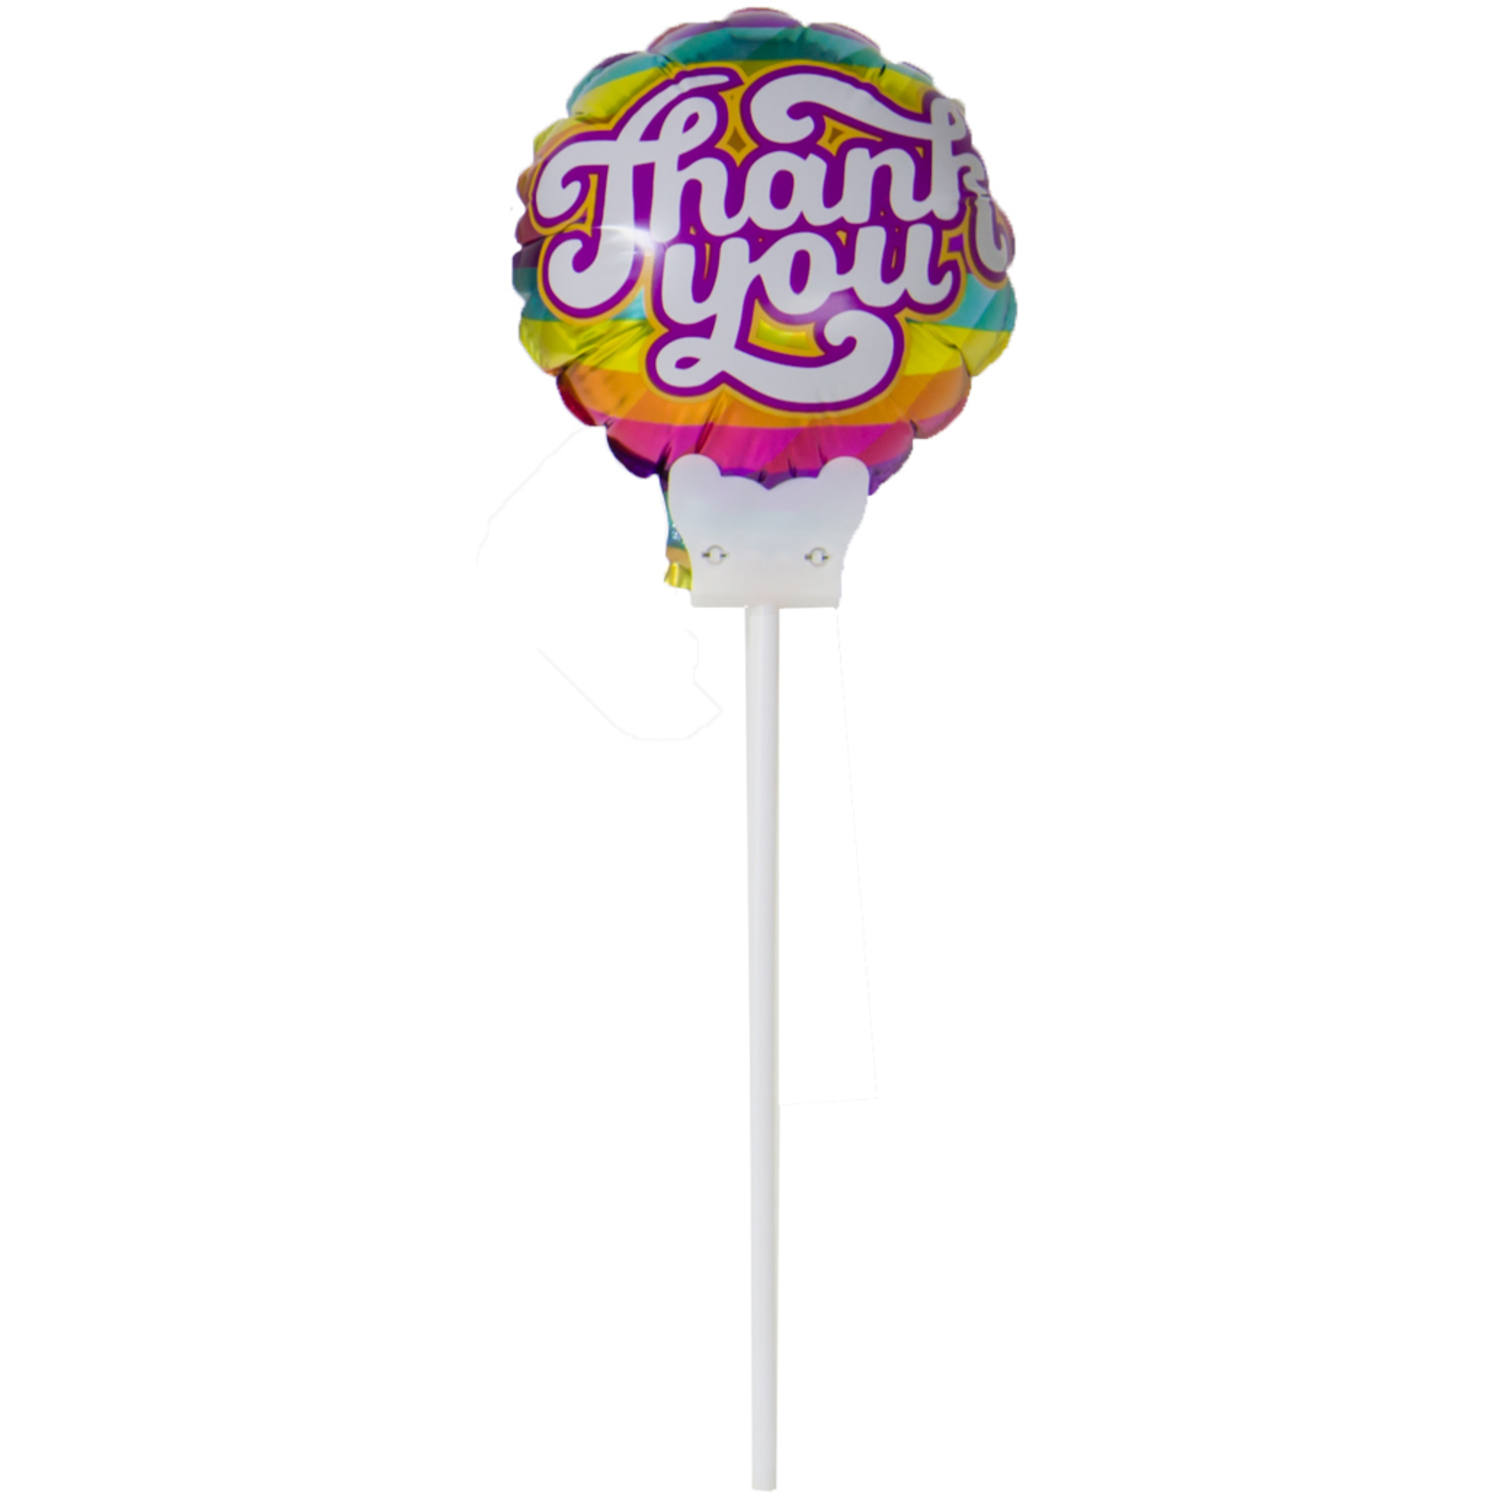 Mikroballong med kort Thank you